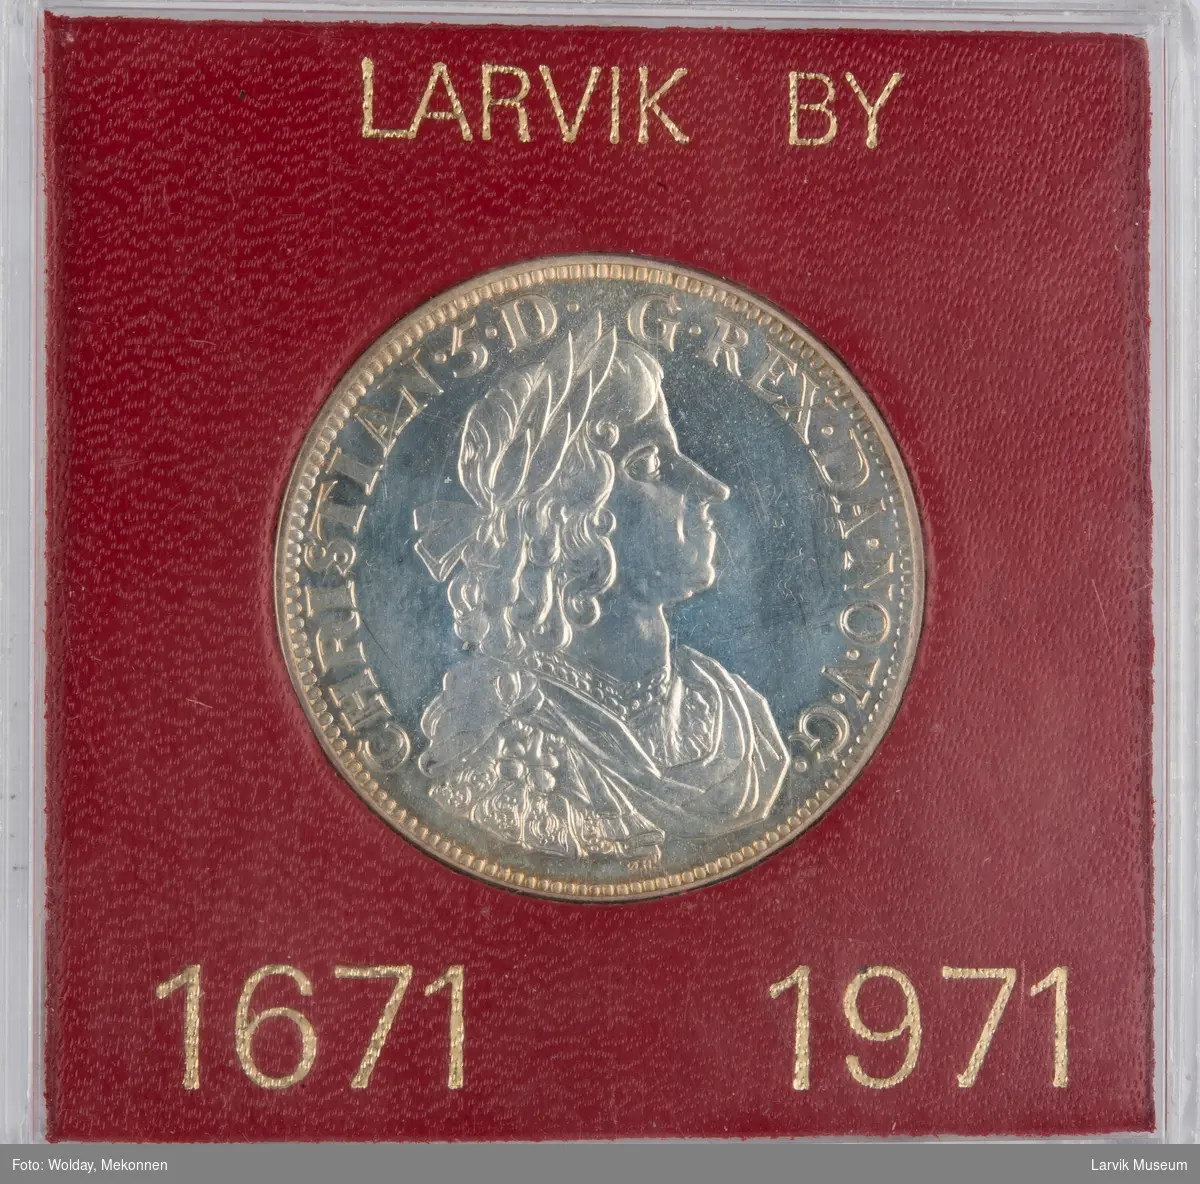 Forside: Christian 5 - D.
Bakside: Larvik - Gyldenløves by 300 år 1671 - 1971. Skjold i midten.
Myntomslat: Larvik by 1671 - 1971